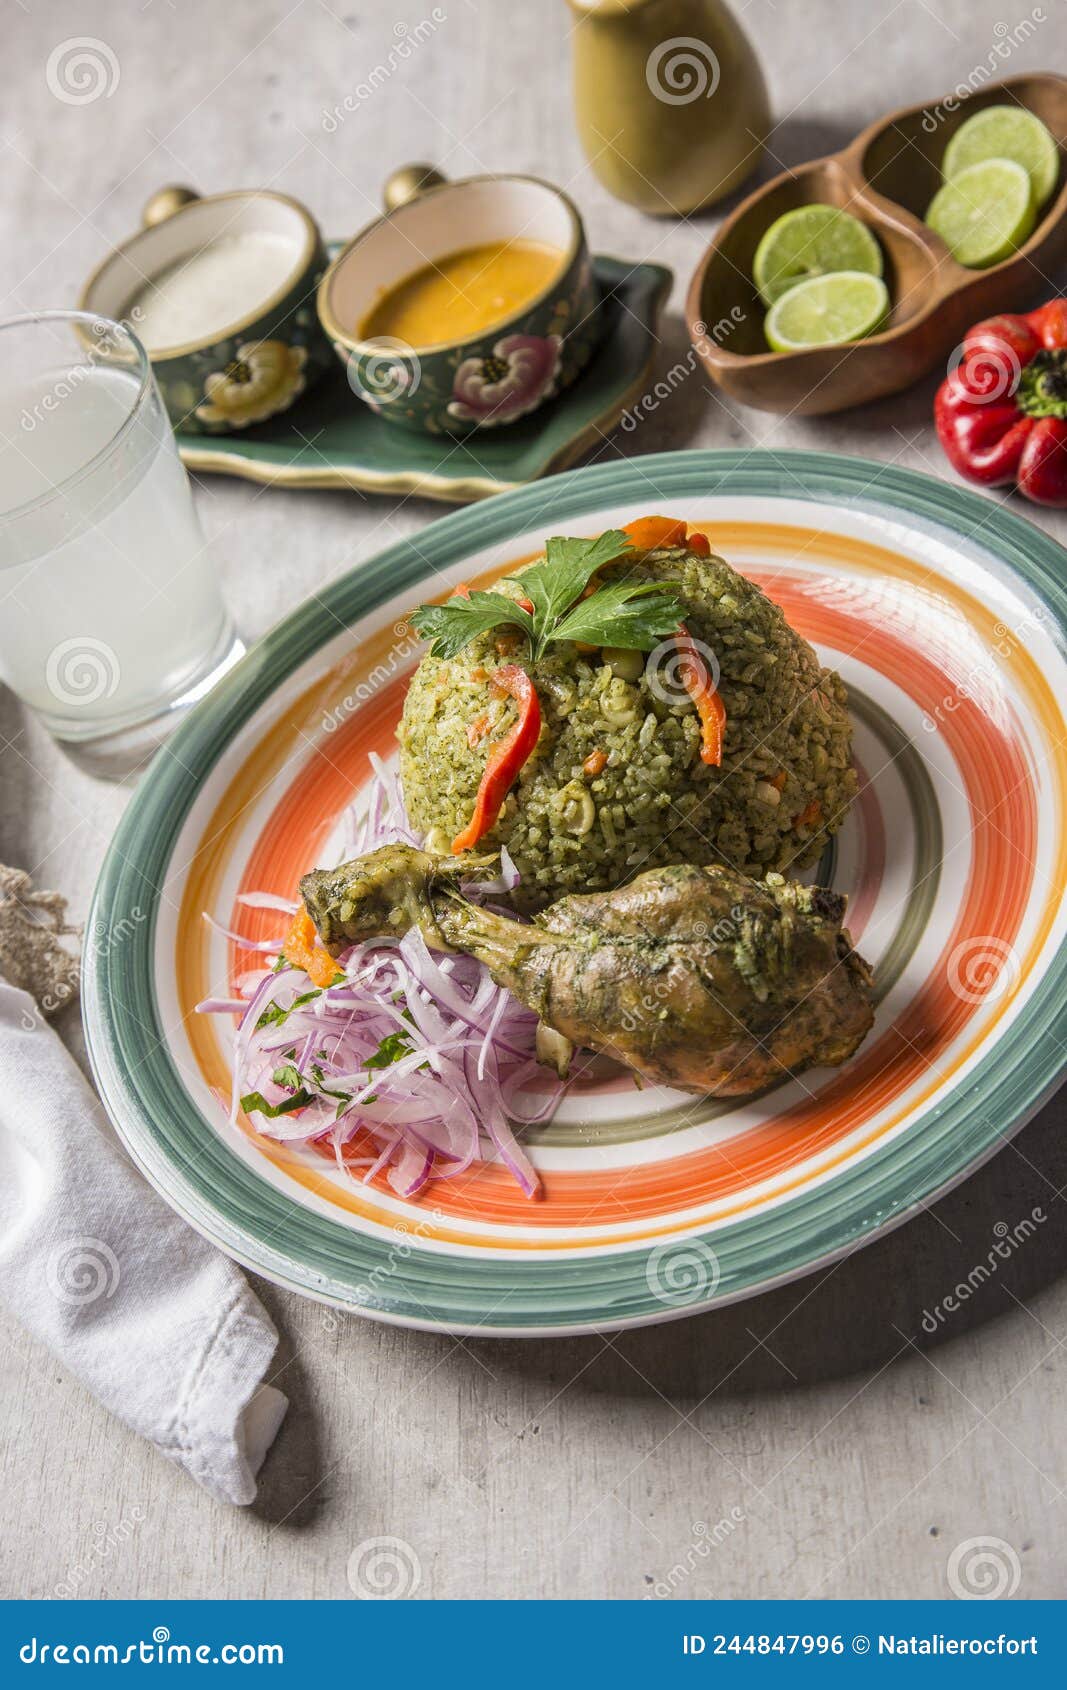 green rice with chicken leg and onion sauce arroz con pollo y zarza de cebolla peruvian comfort food buffet traditional table